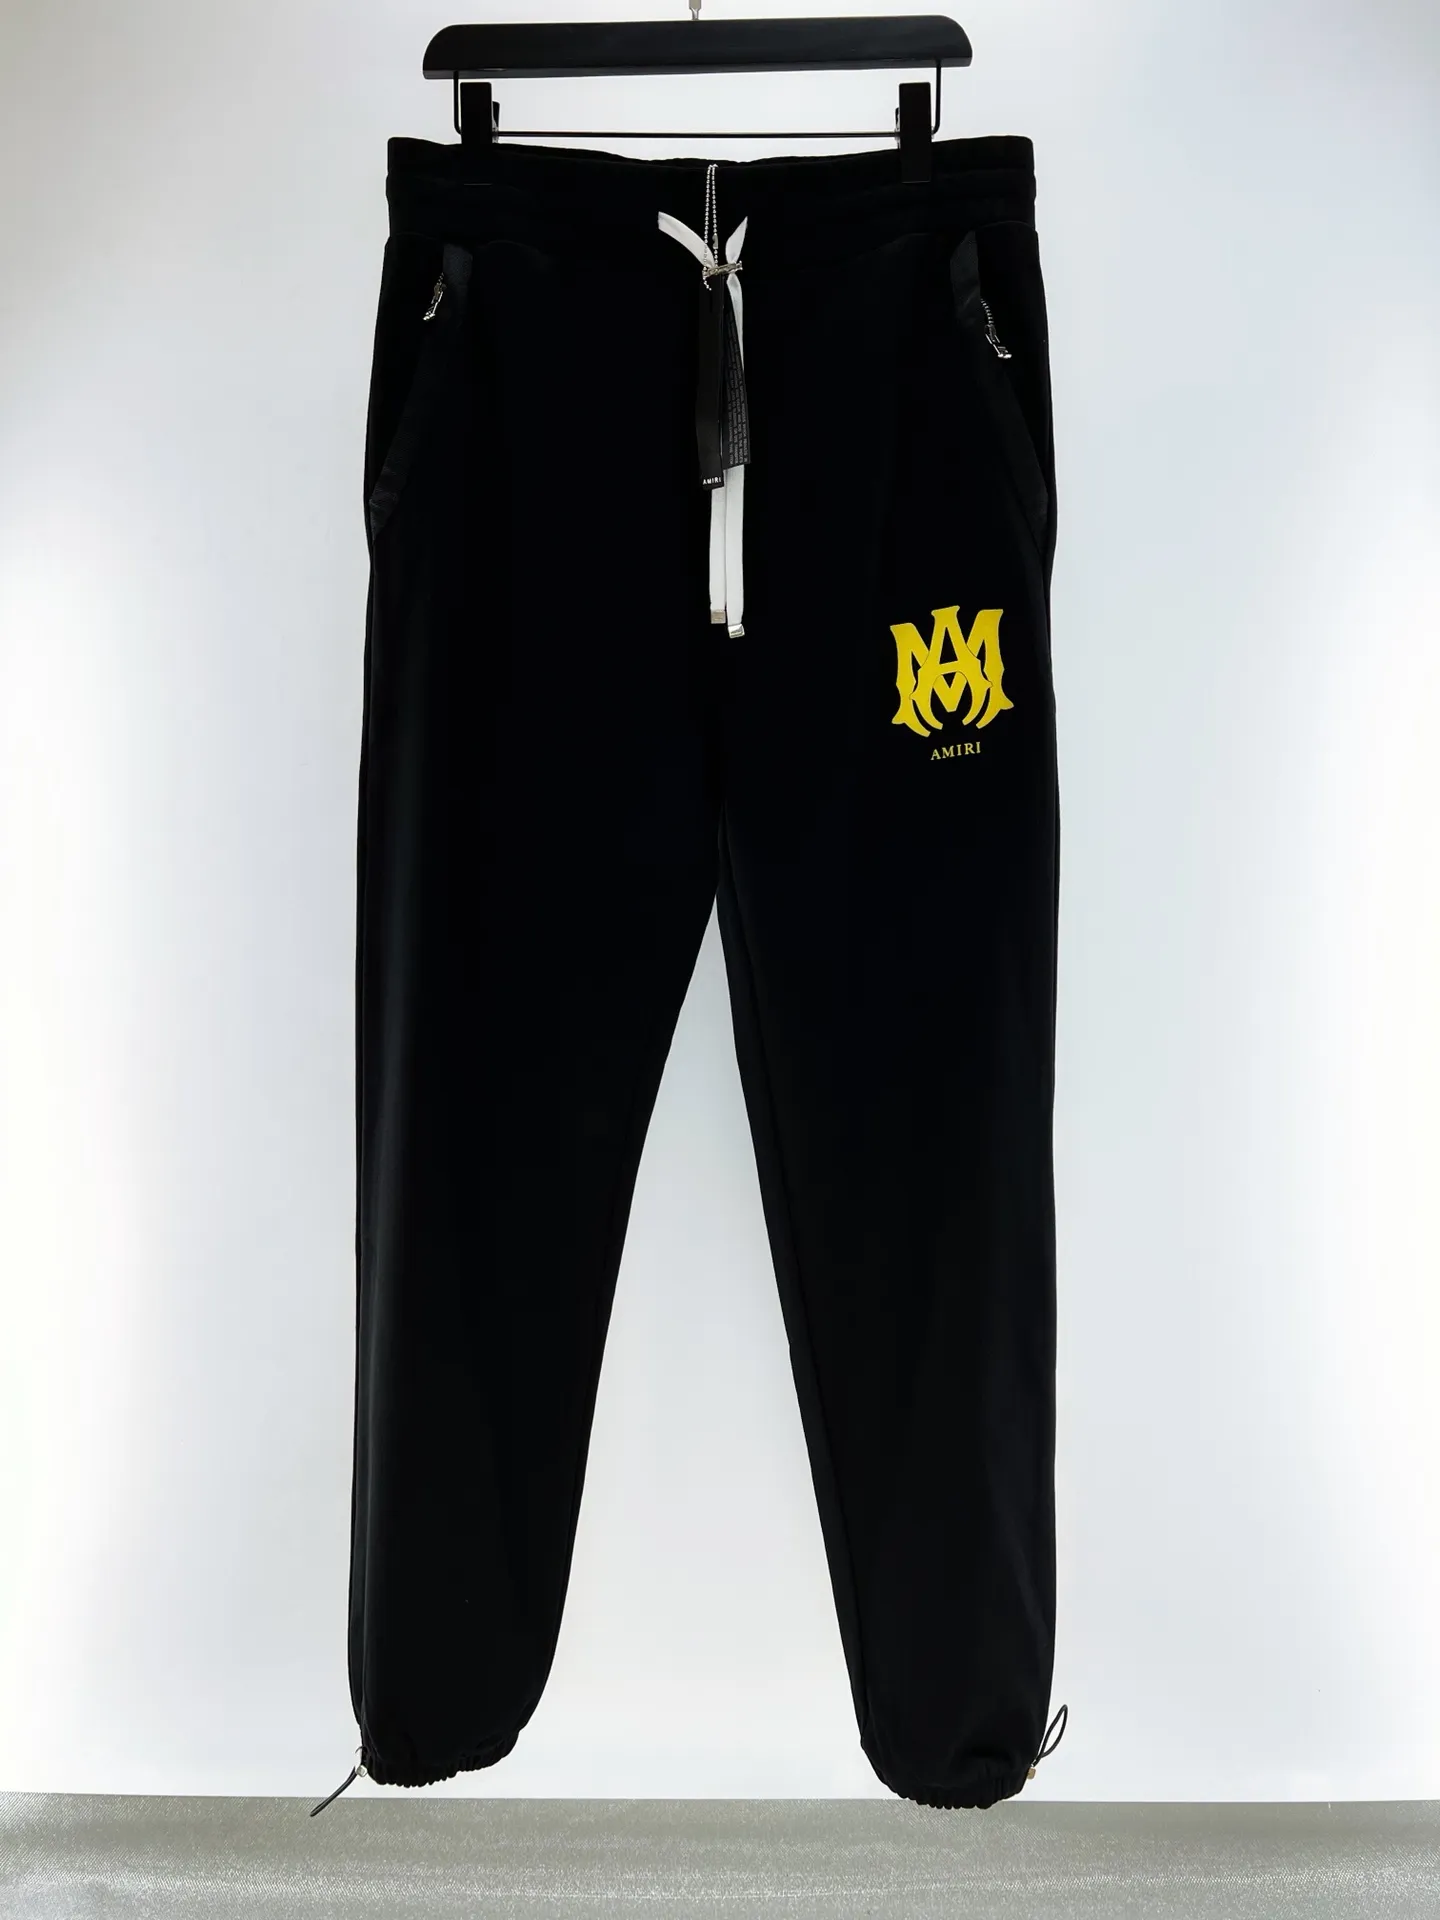 2023 spring new fashions Mens designer high quality black jogging cargo pants ~ US SIZE pants ~ tops mens yoga joggers track sweat pants